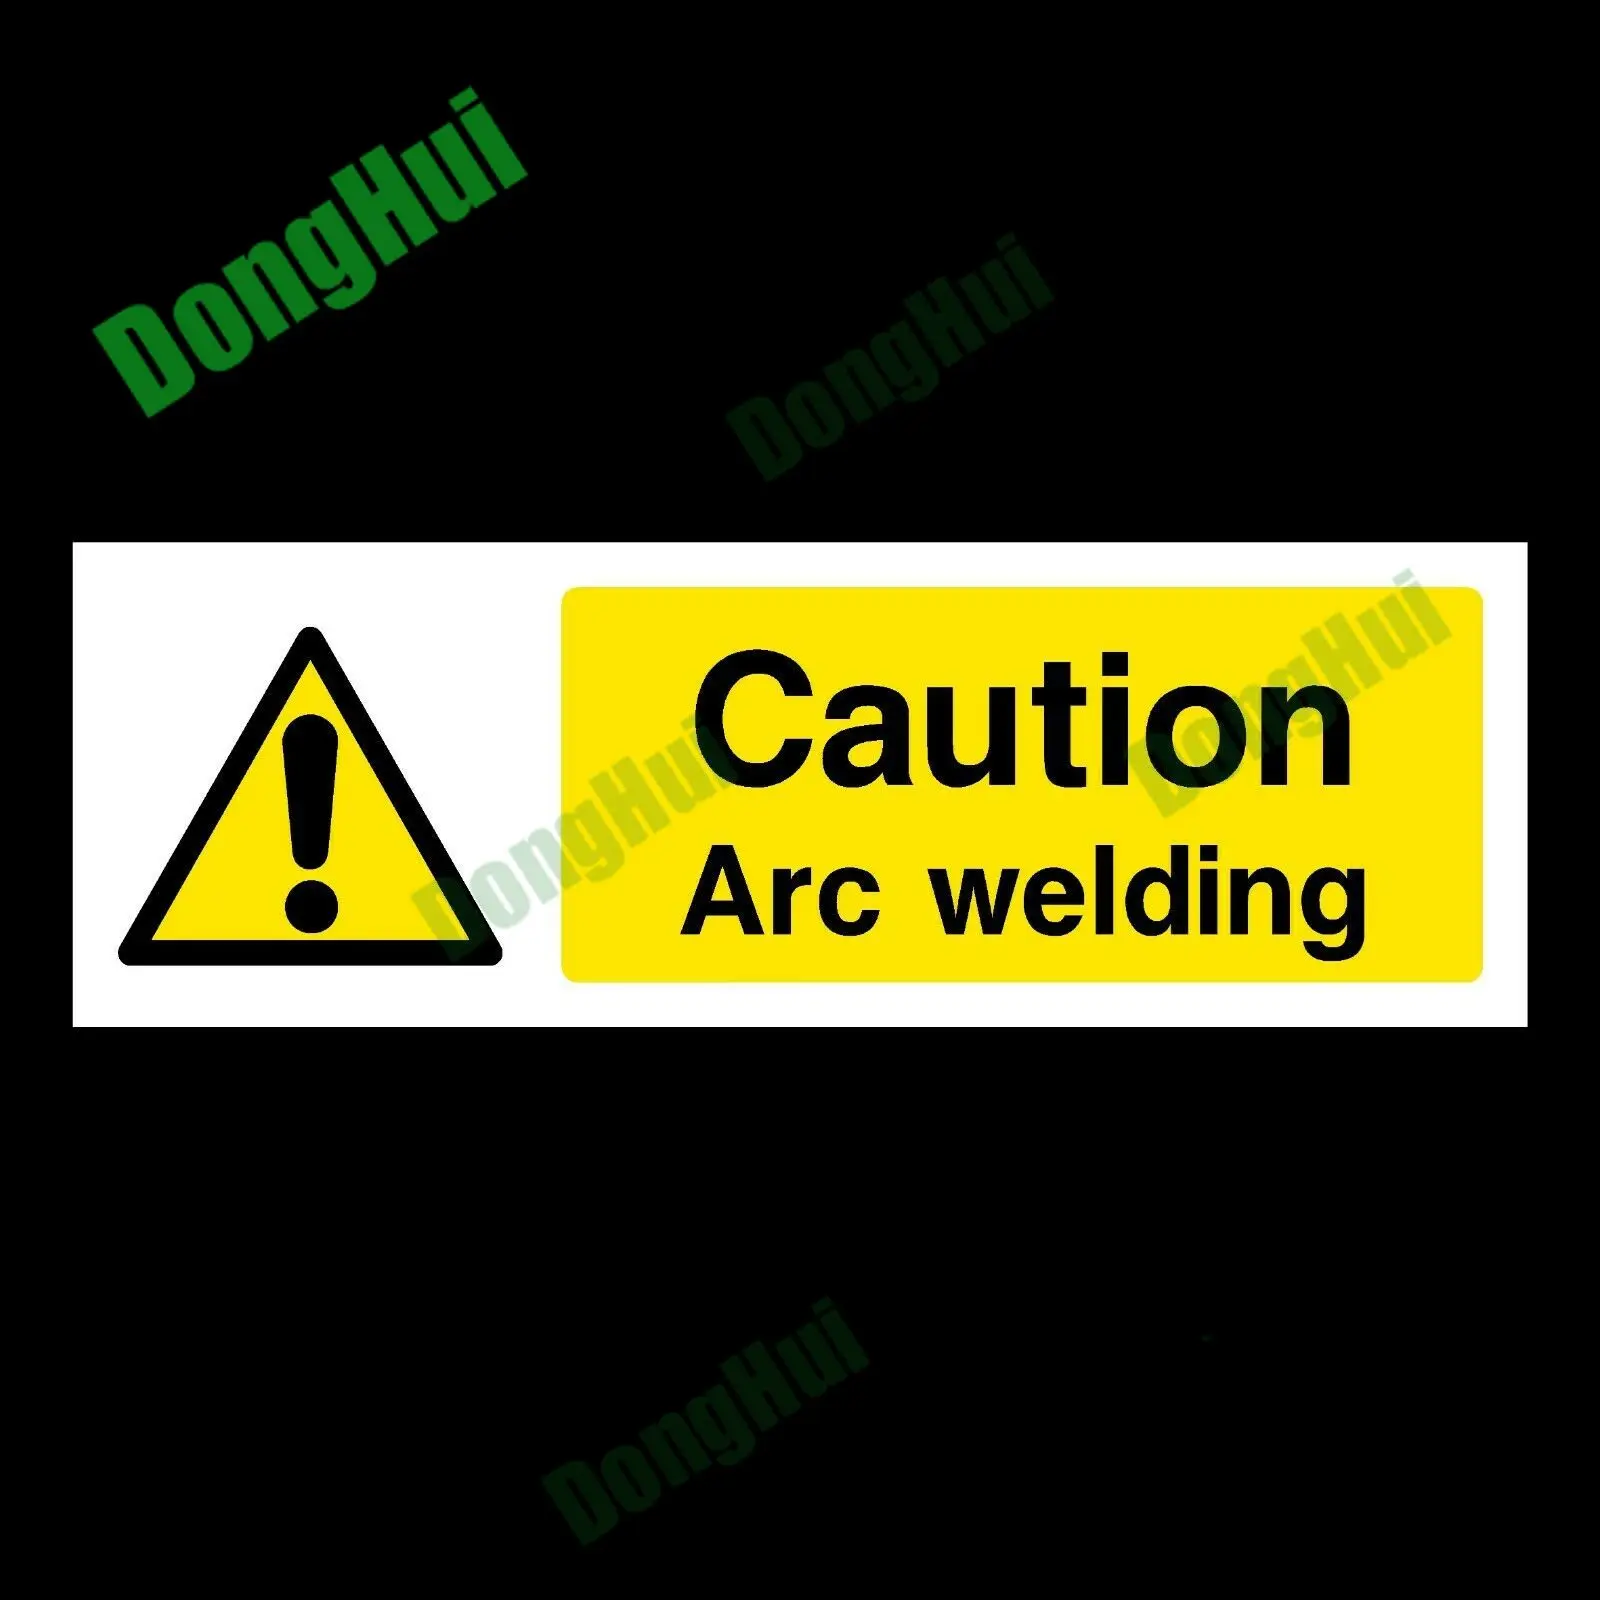 Caution Arc Welding Warning Danger Plastic Sign OR Sticker PVC Waterproof Car Sticker Car Window Decal Maintenance Workshops